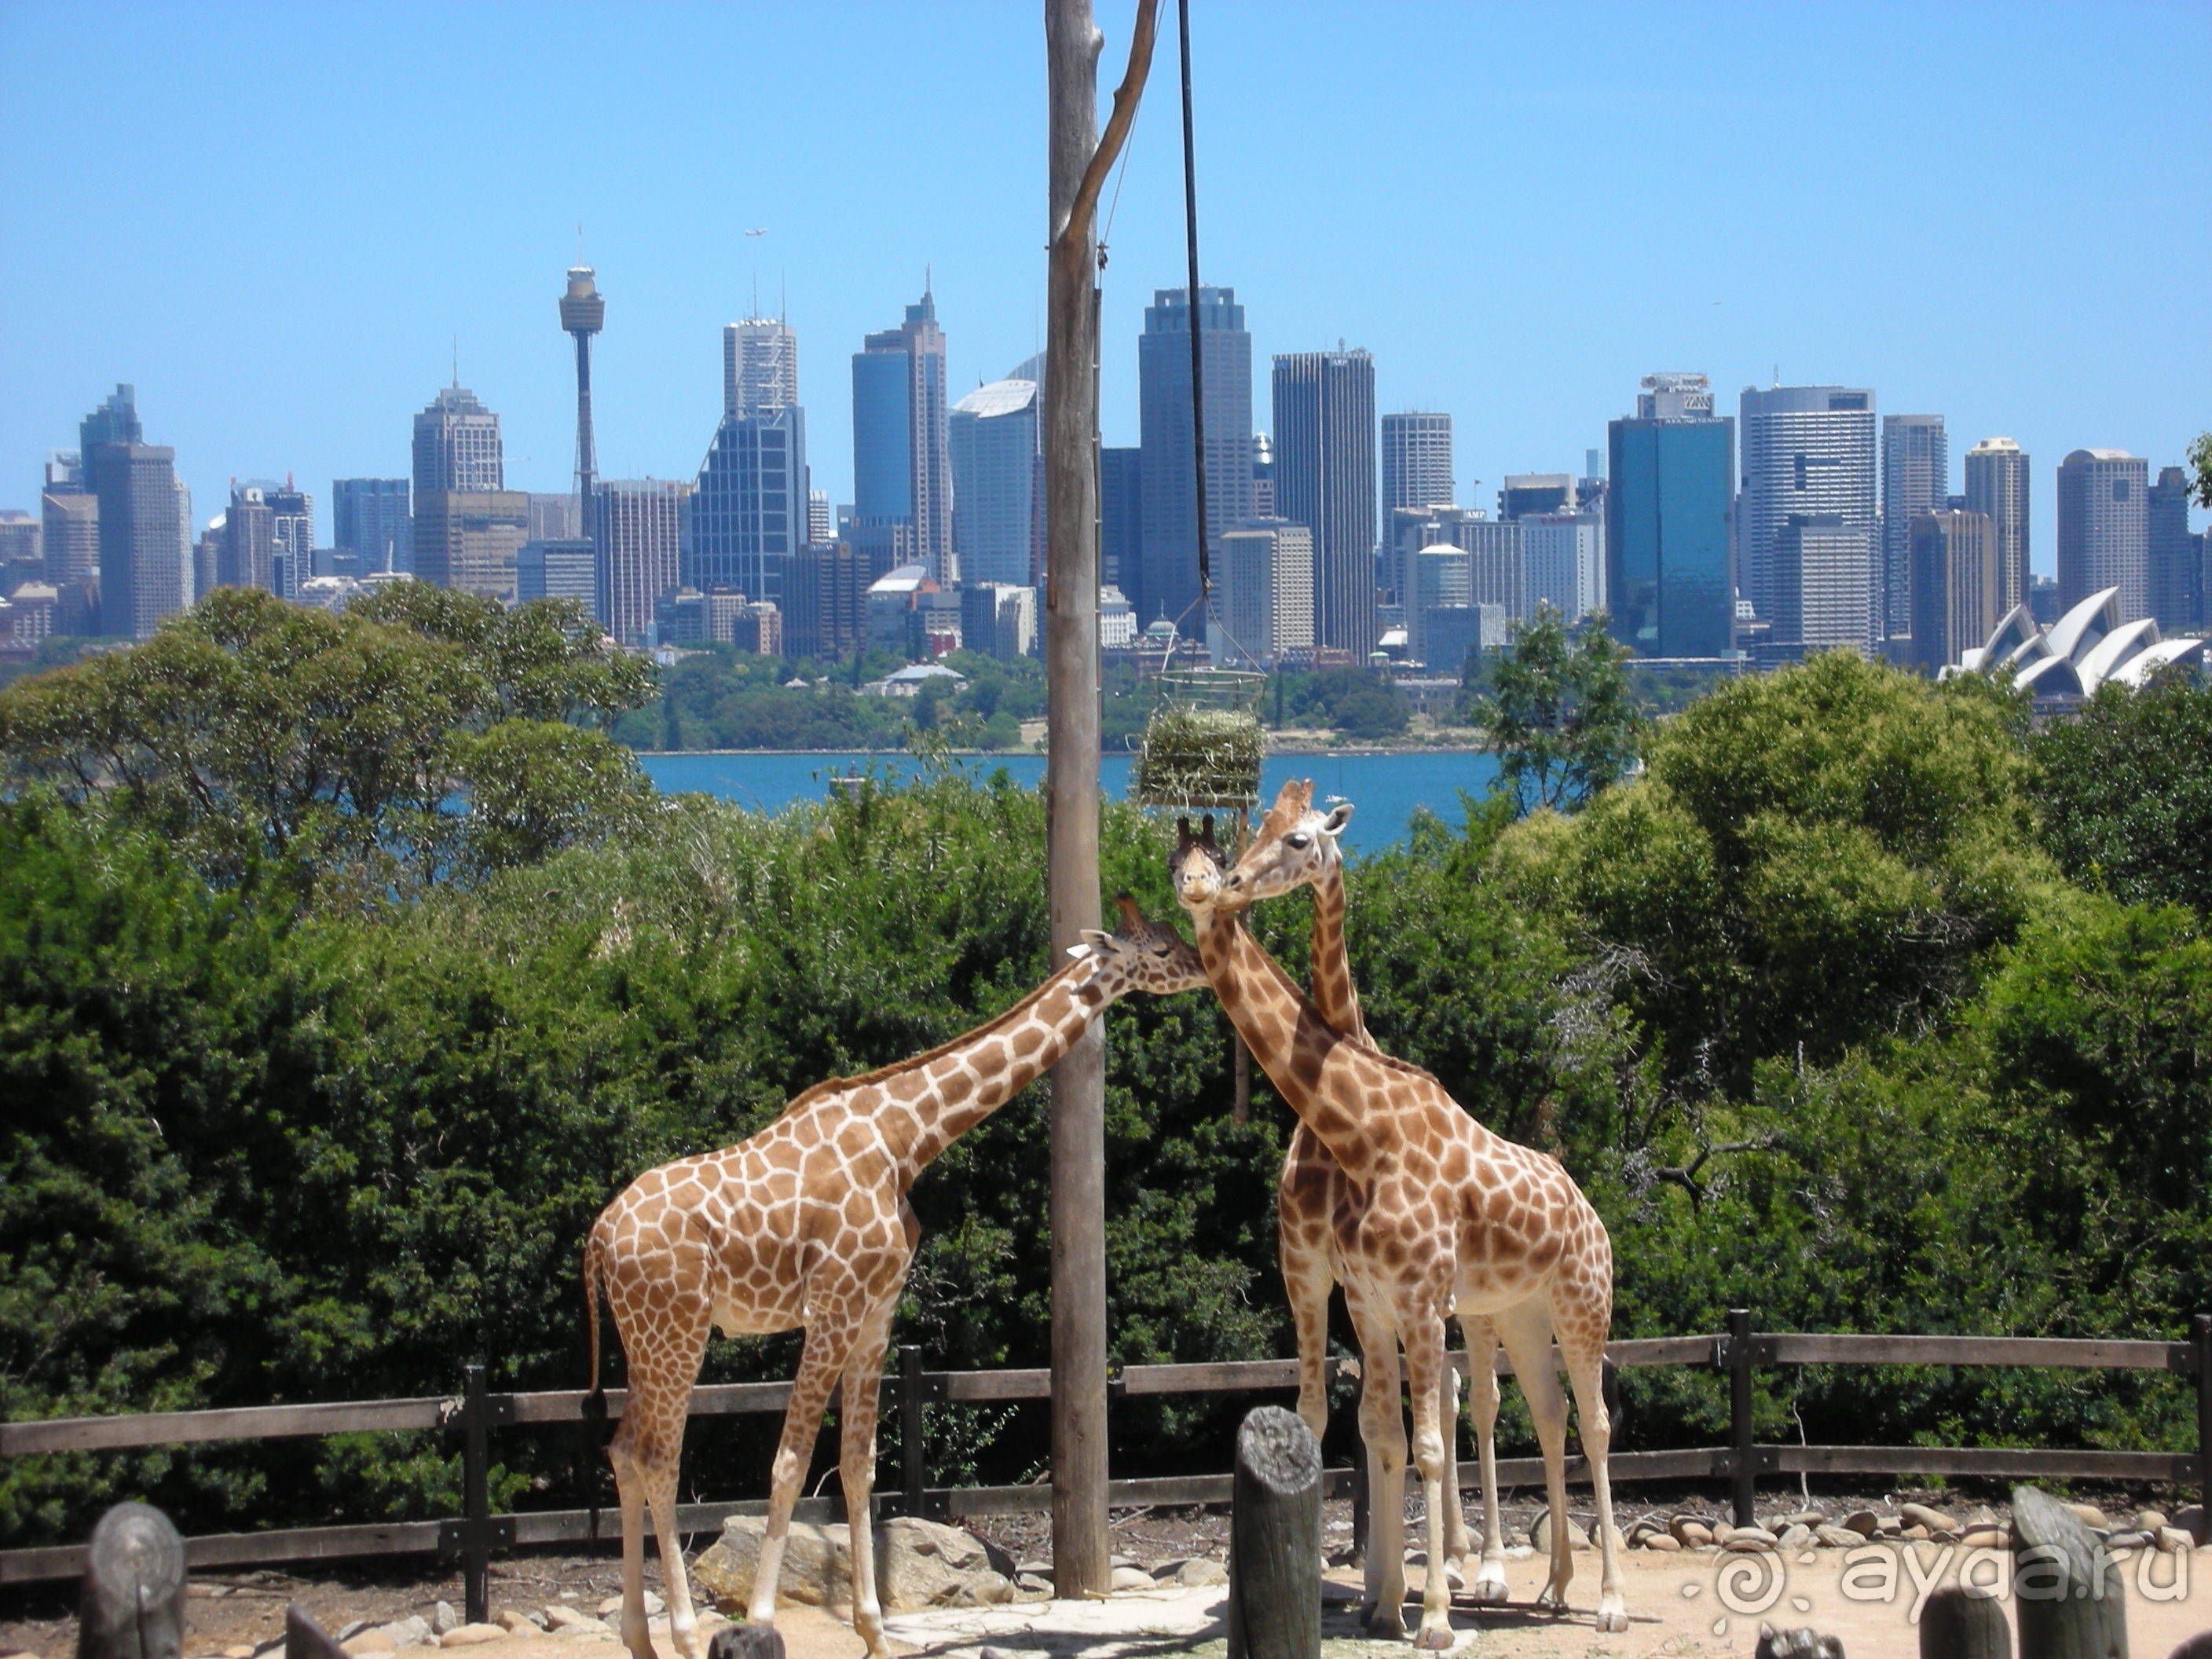 Zoo animals park. Зоопарк Таронга в Австралии. Таронга Сидней Австралия. Taronga зоопарк Сидней. Австралийский зоопарк Сидней.